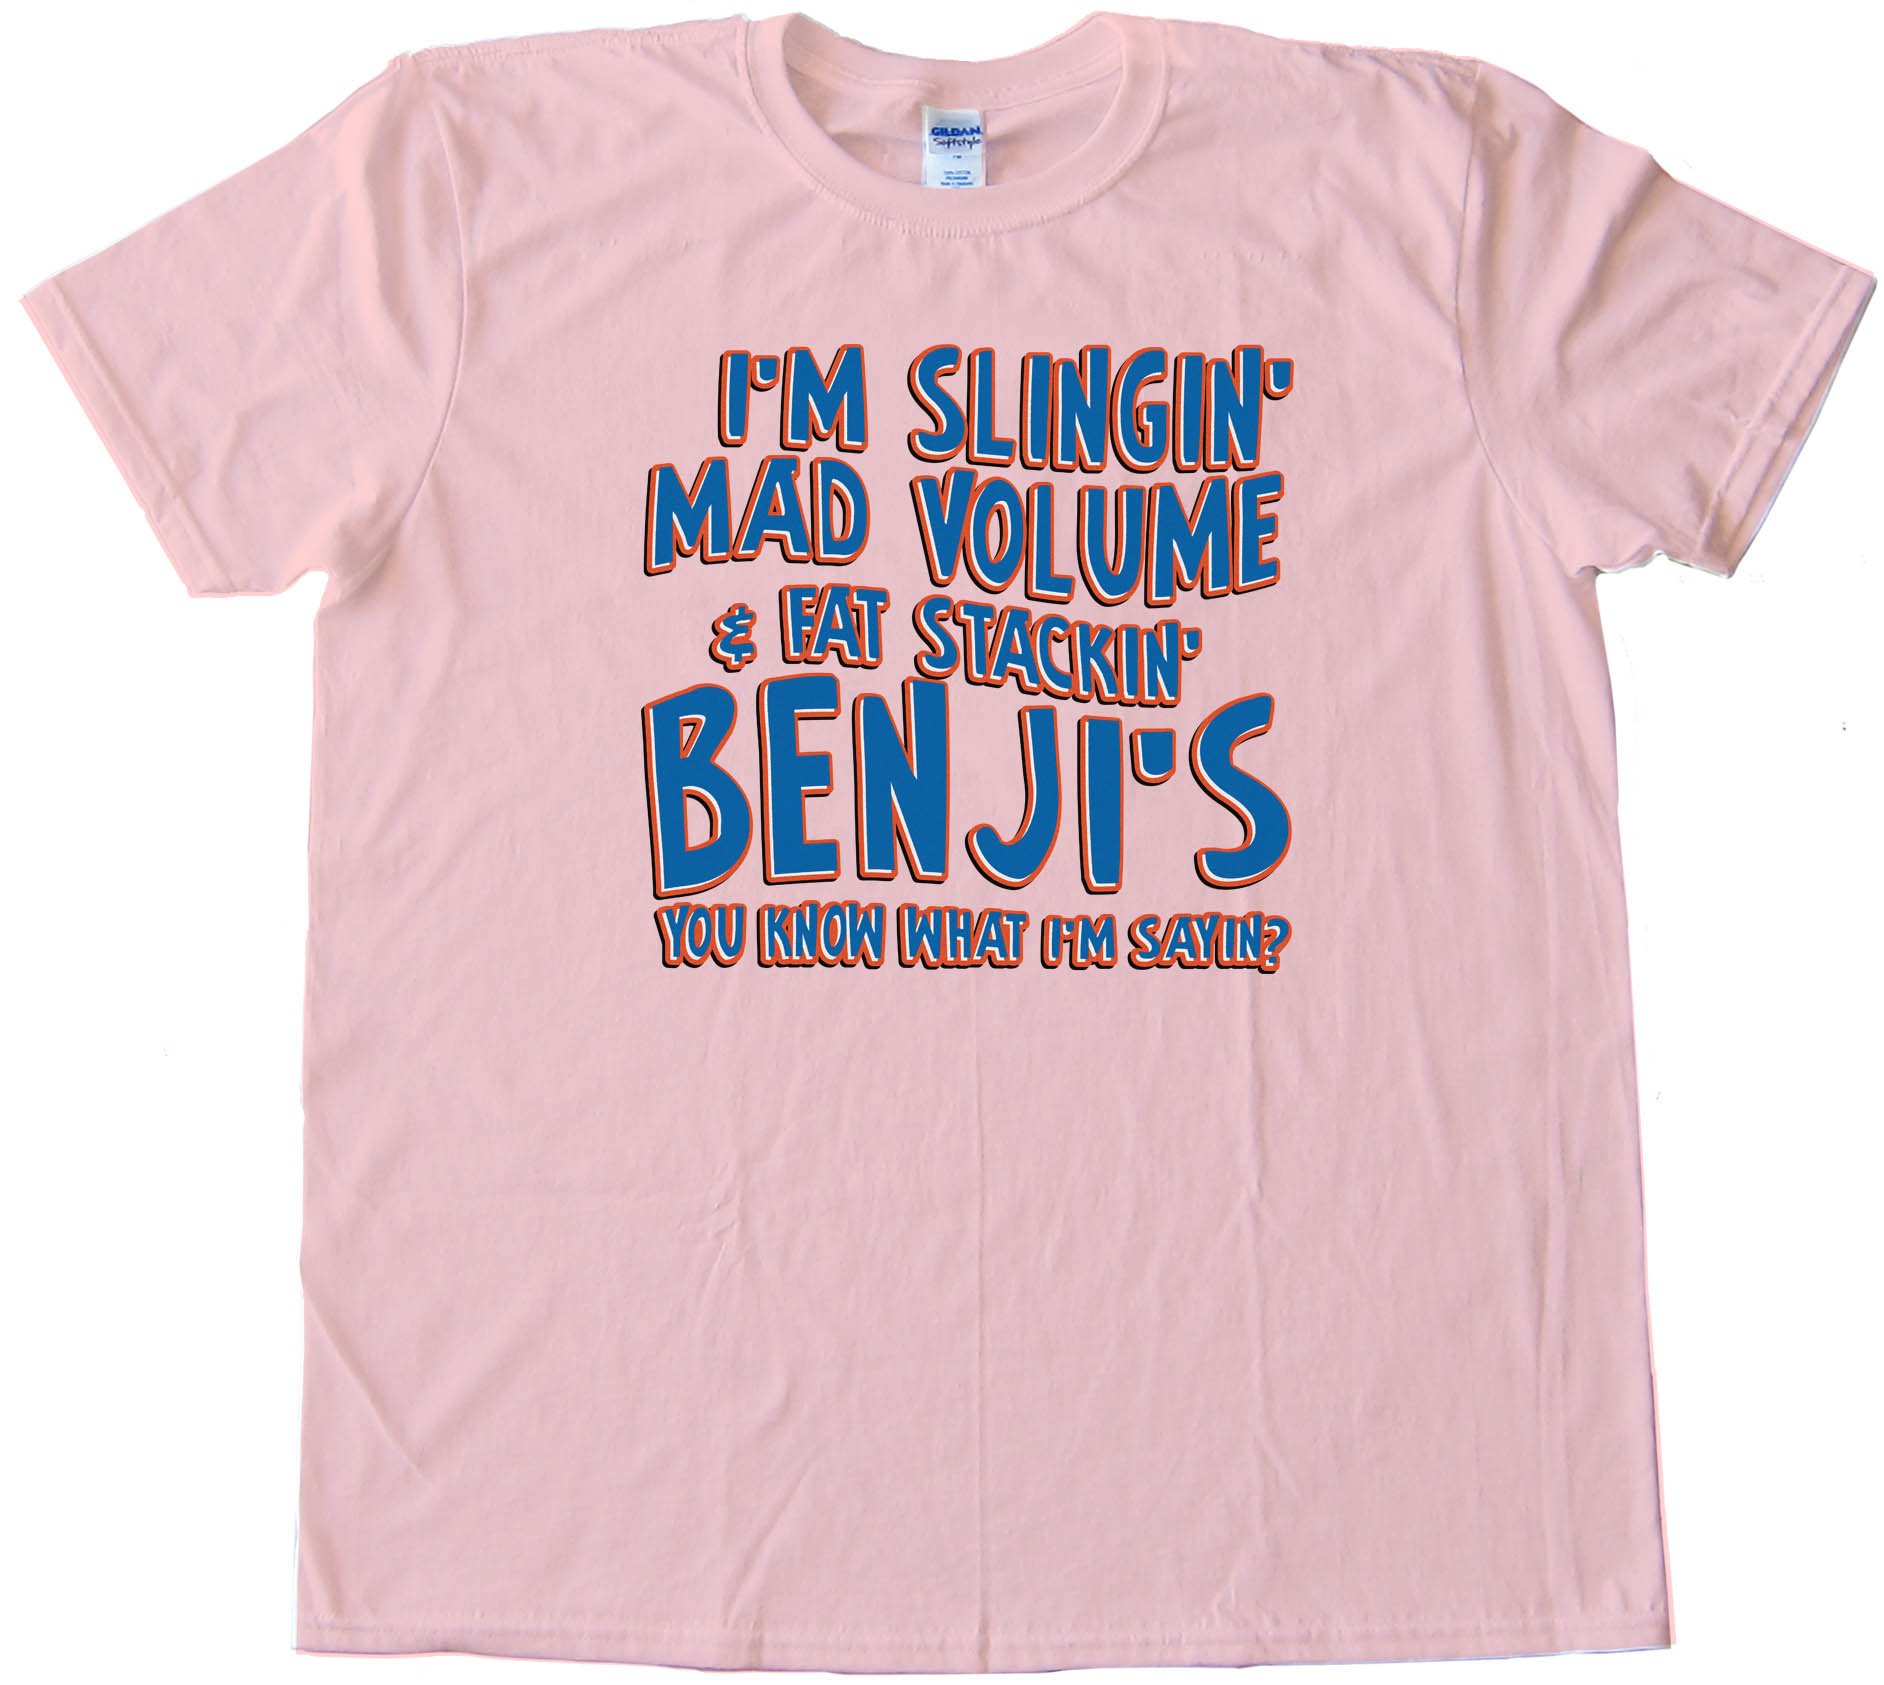 Mad Volume And Fat Stackin Benjis Breaking Bad - Tee Shirt